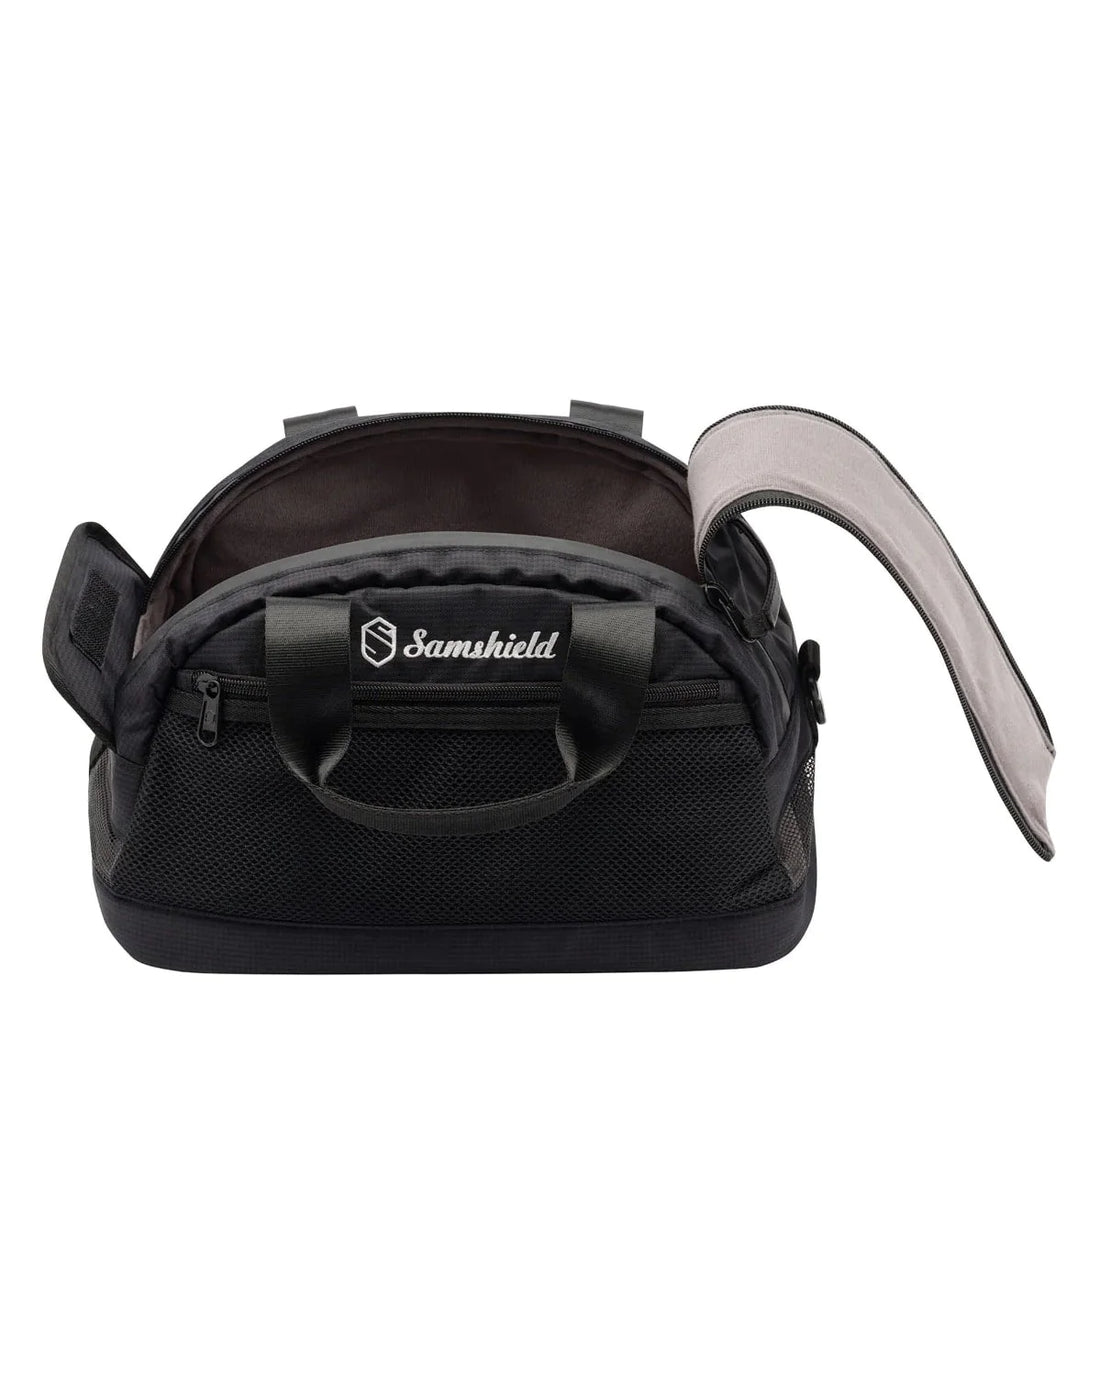 Samshield - 2.0 Luxury Bag - Black